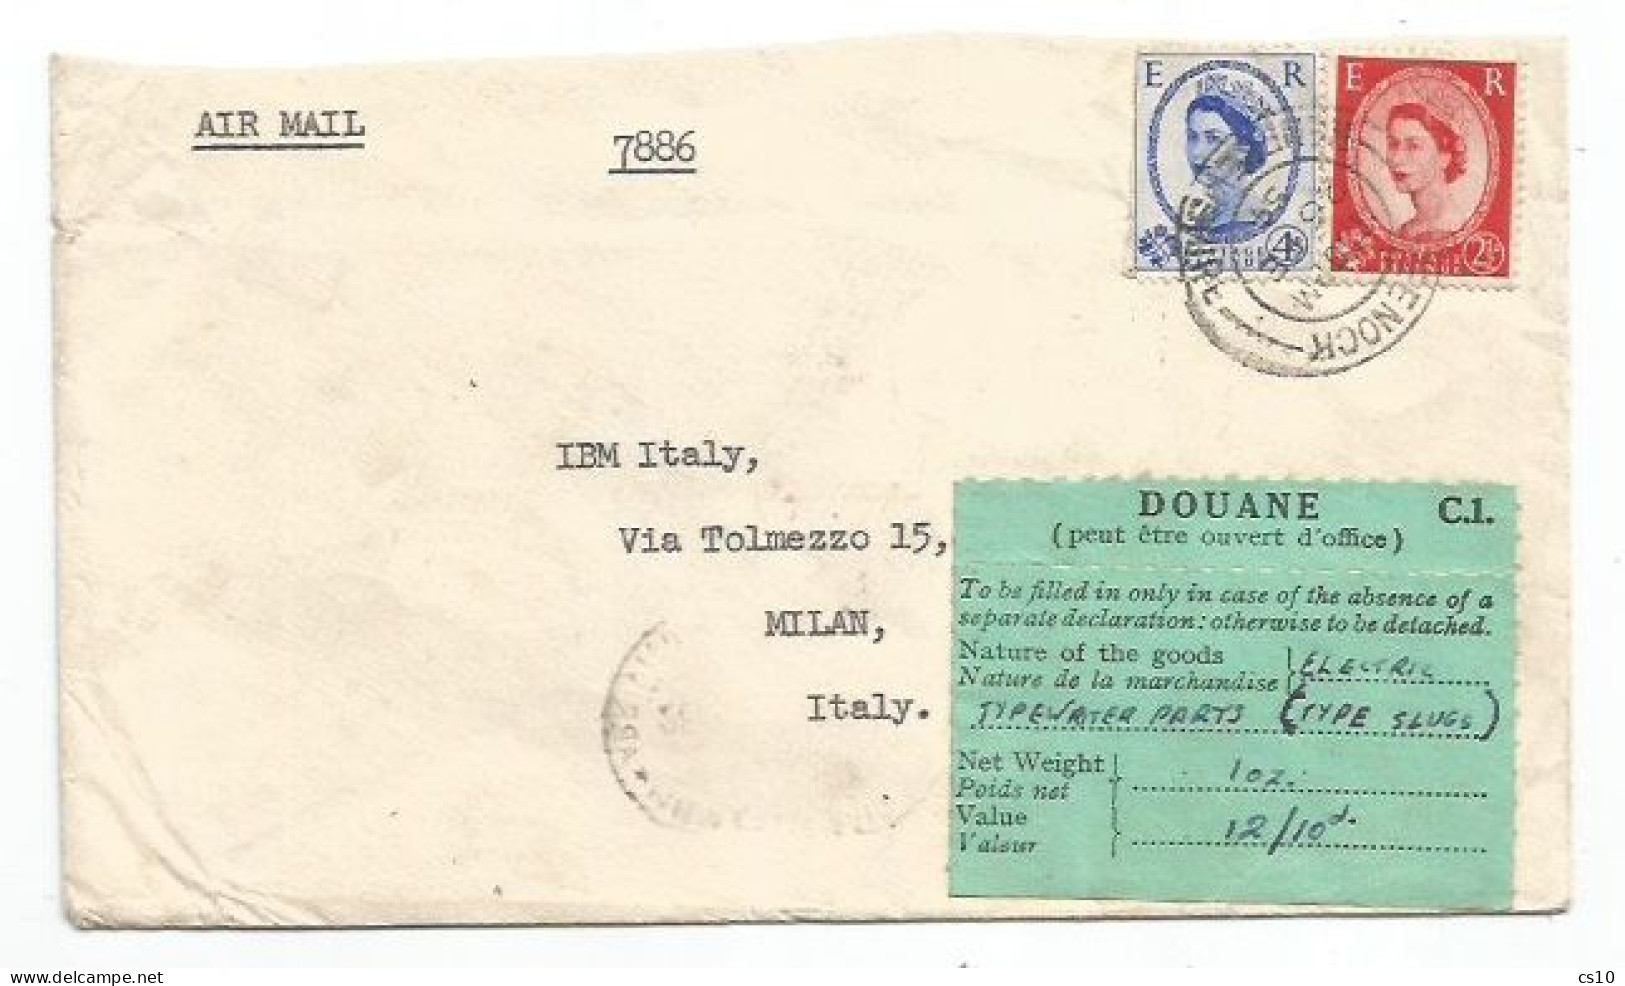 UK Britain Douane Customs Zoll Dogana Label C1 X Typewriter Parts Airmail CV UK 1954 To Italy C/o IBM Corporation - Marcophilie